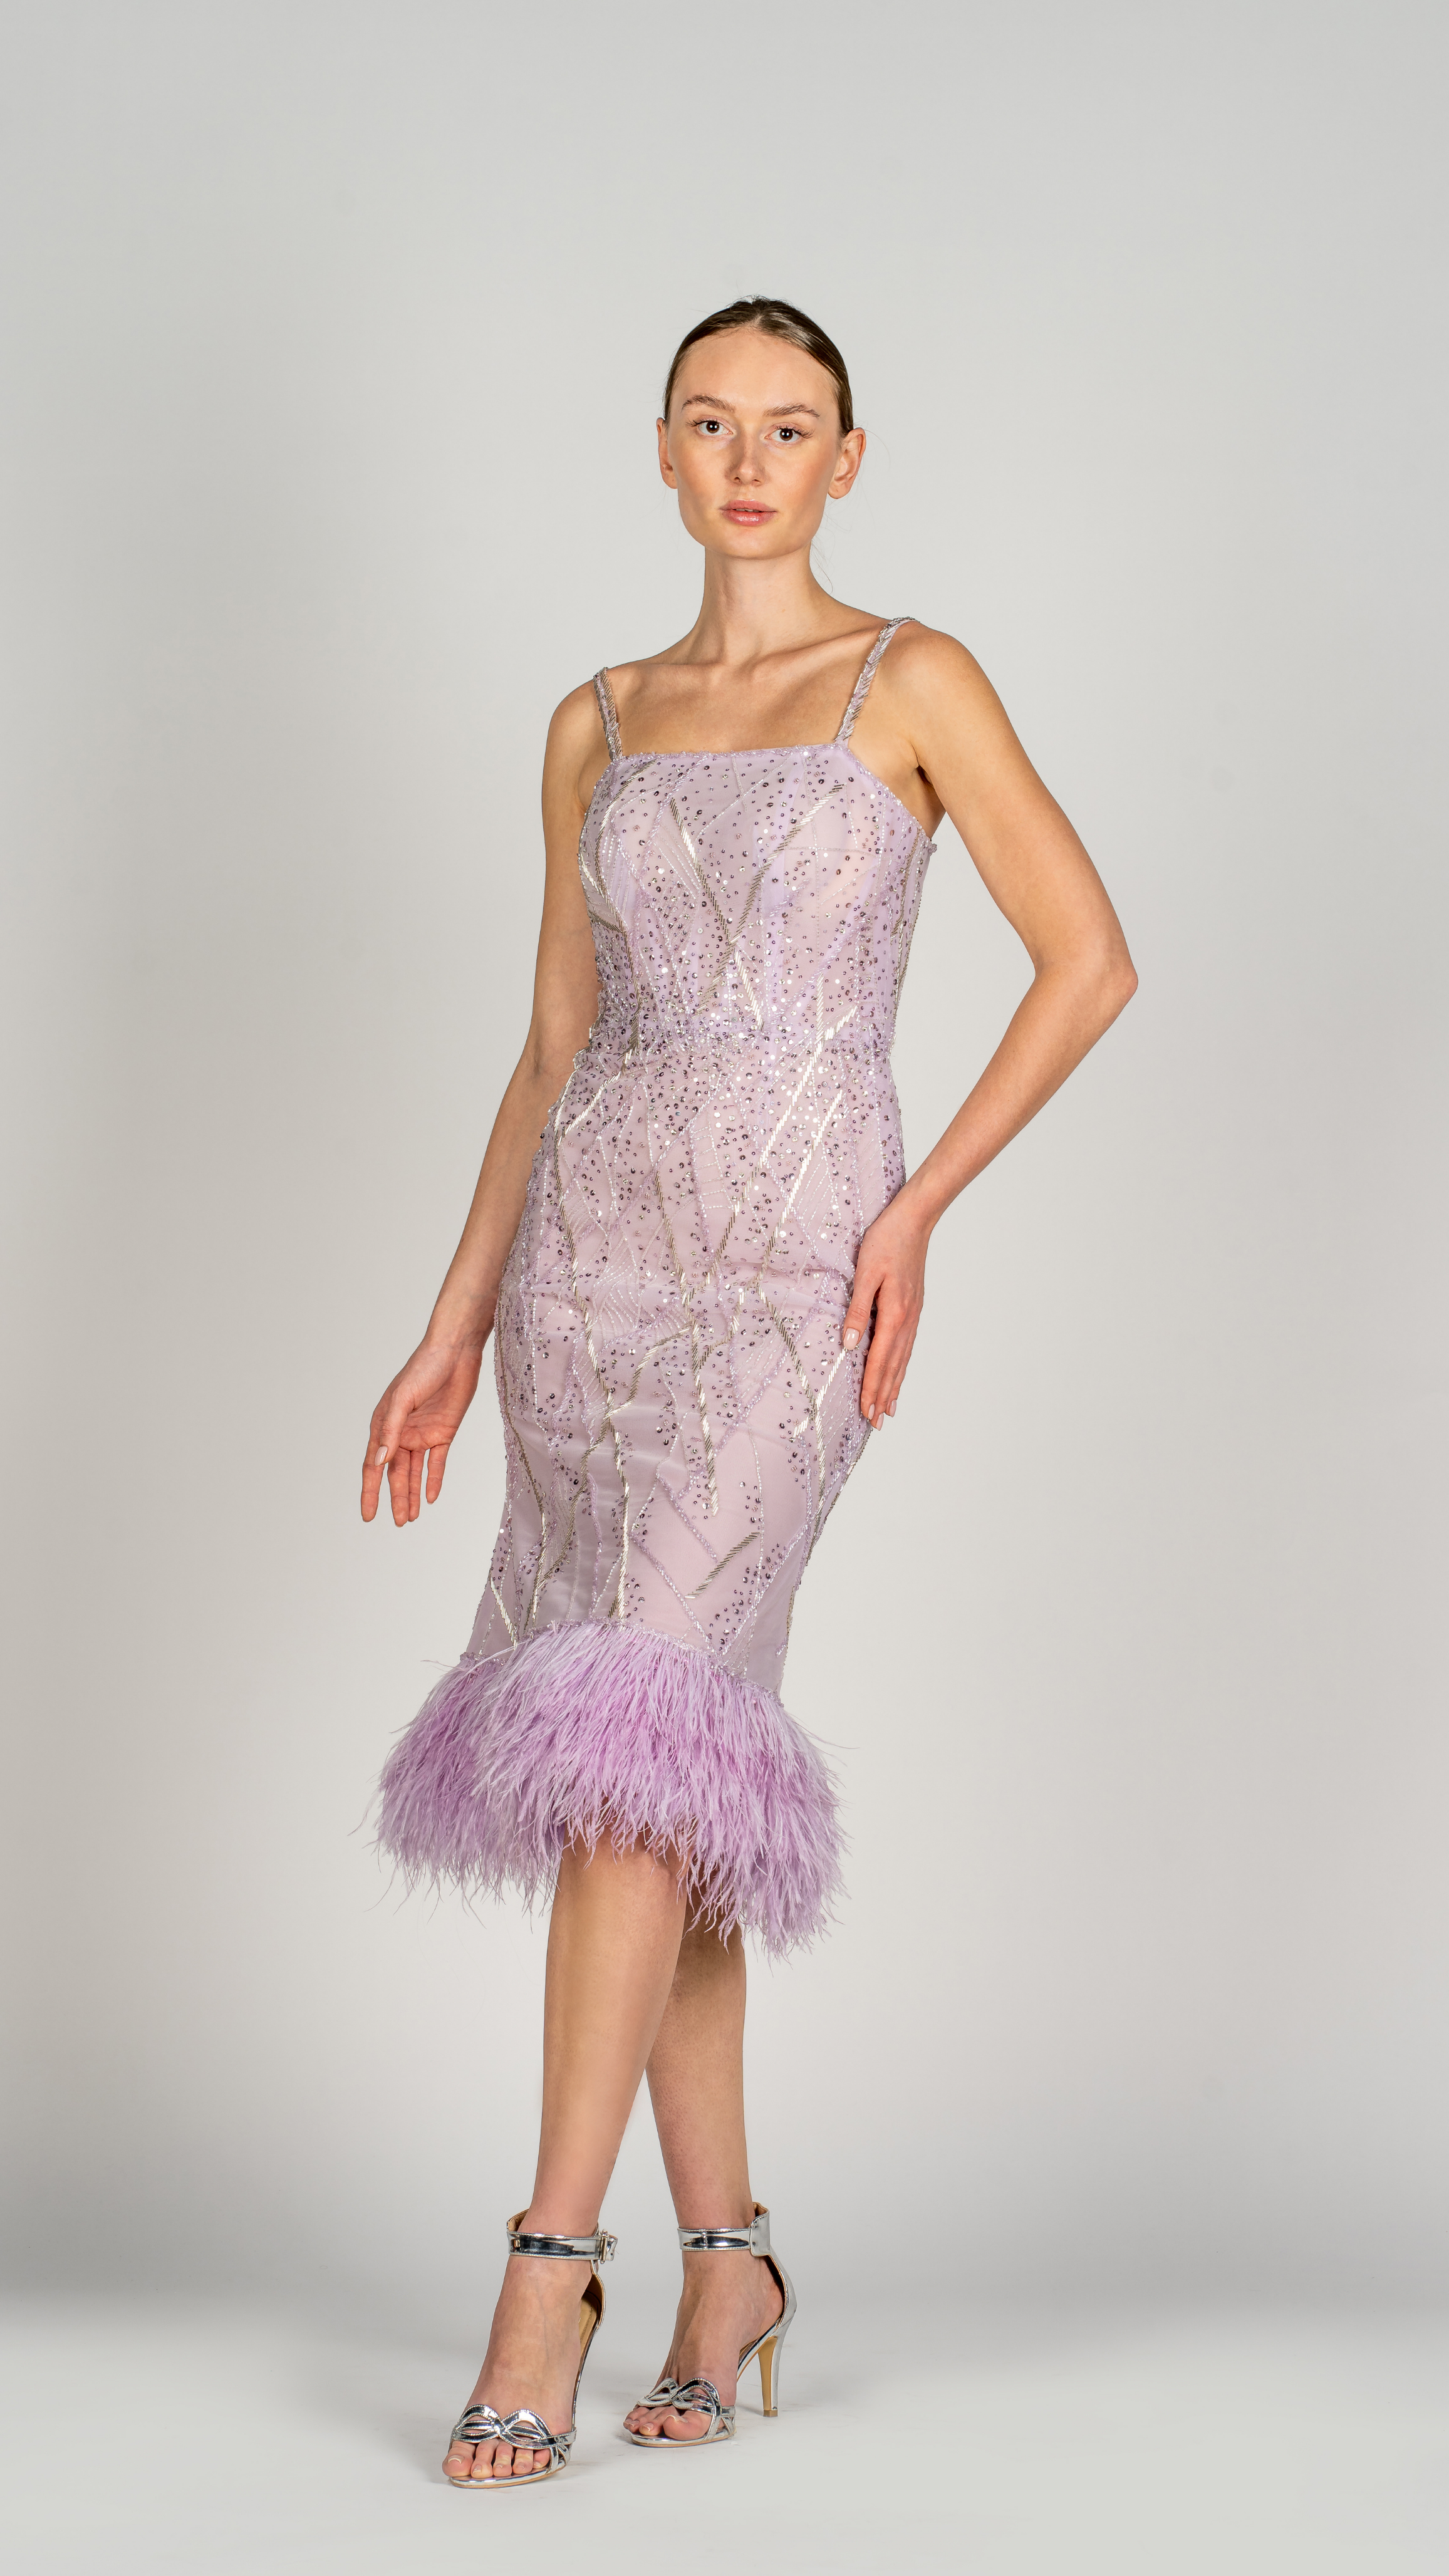 Midi Strapless Lavender Cocktail Dress